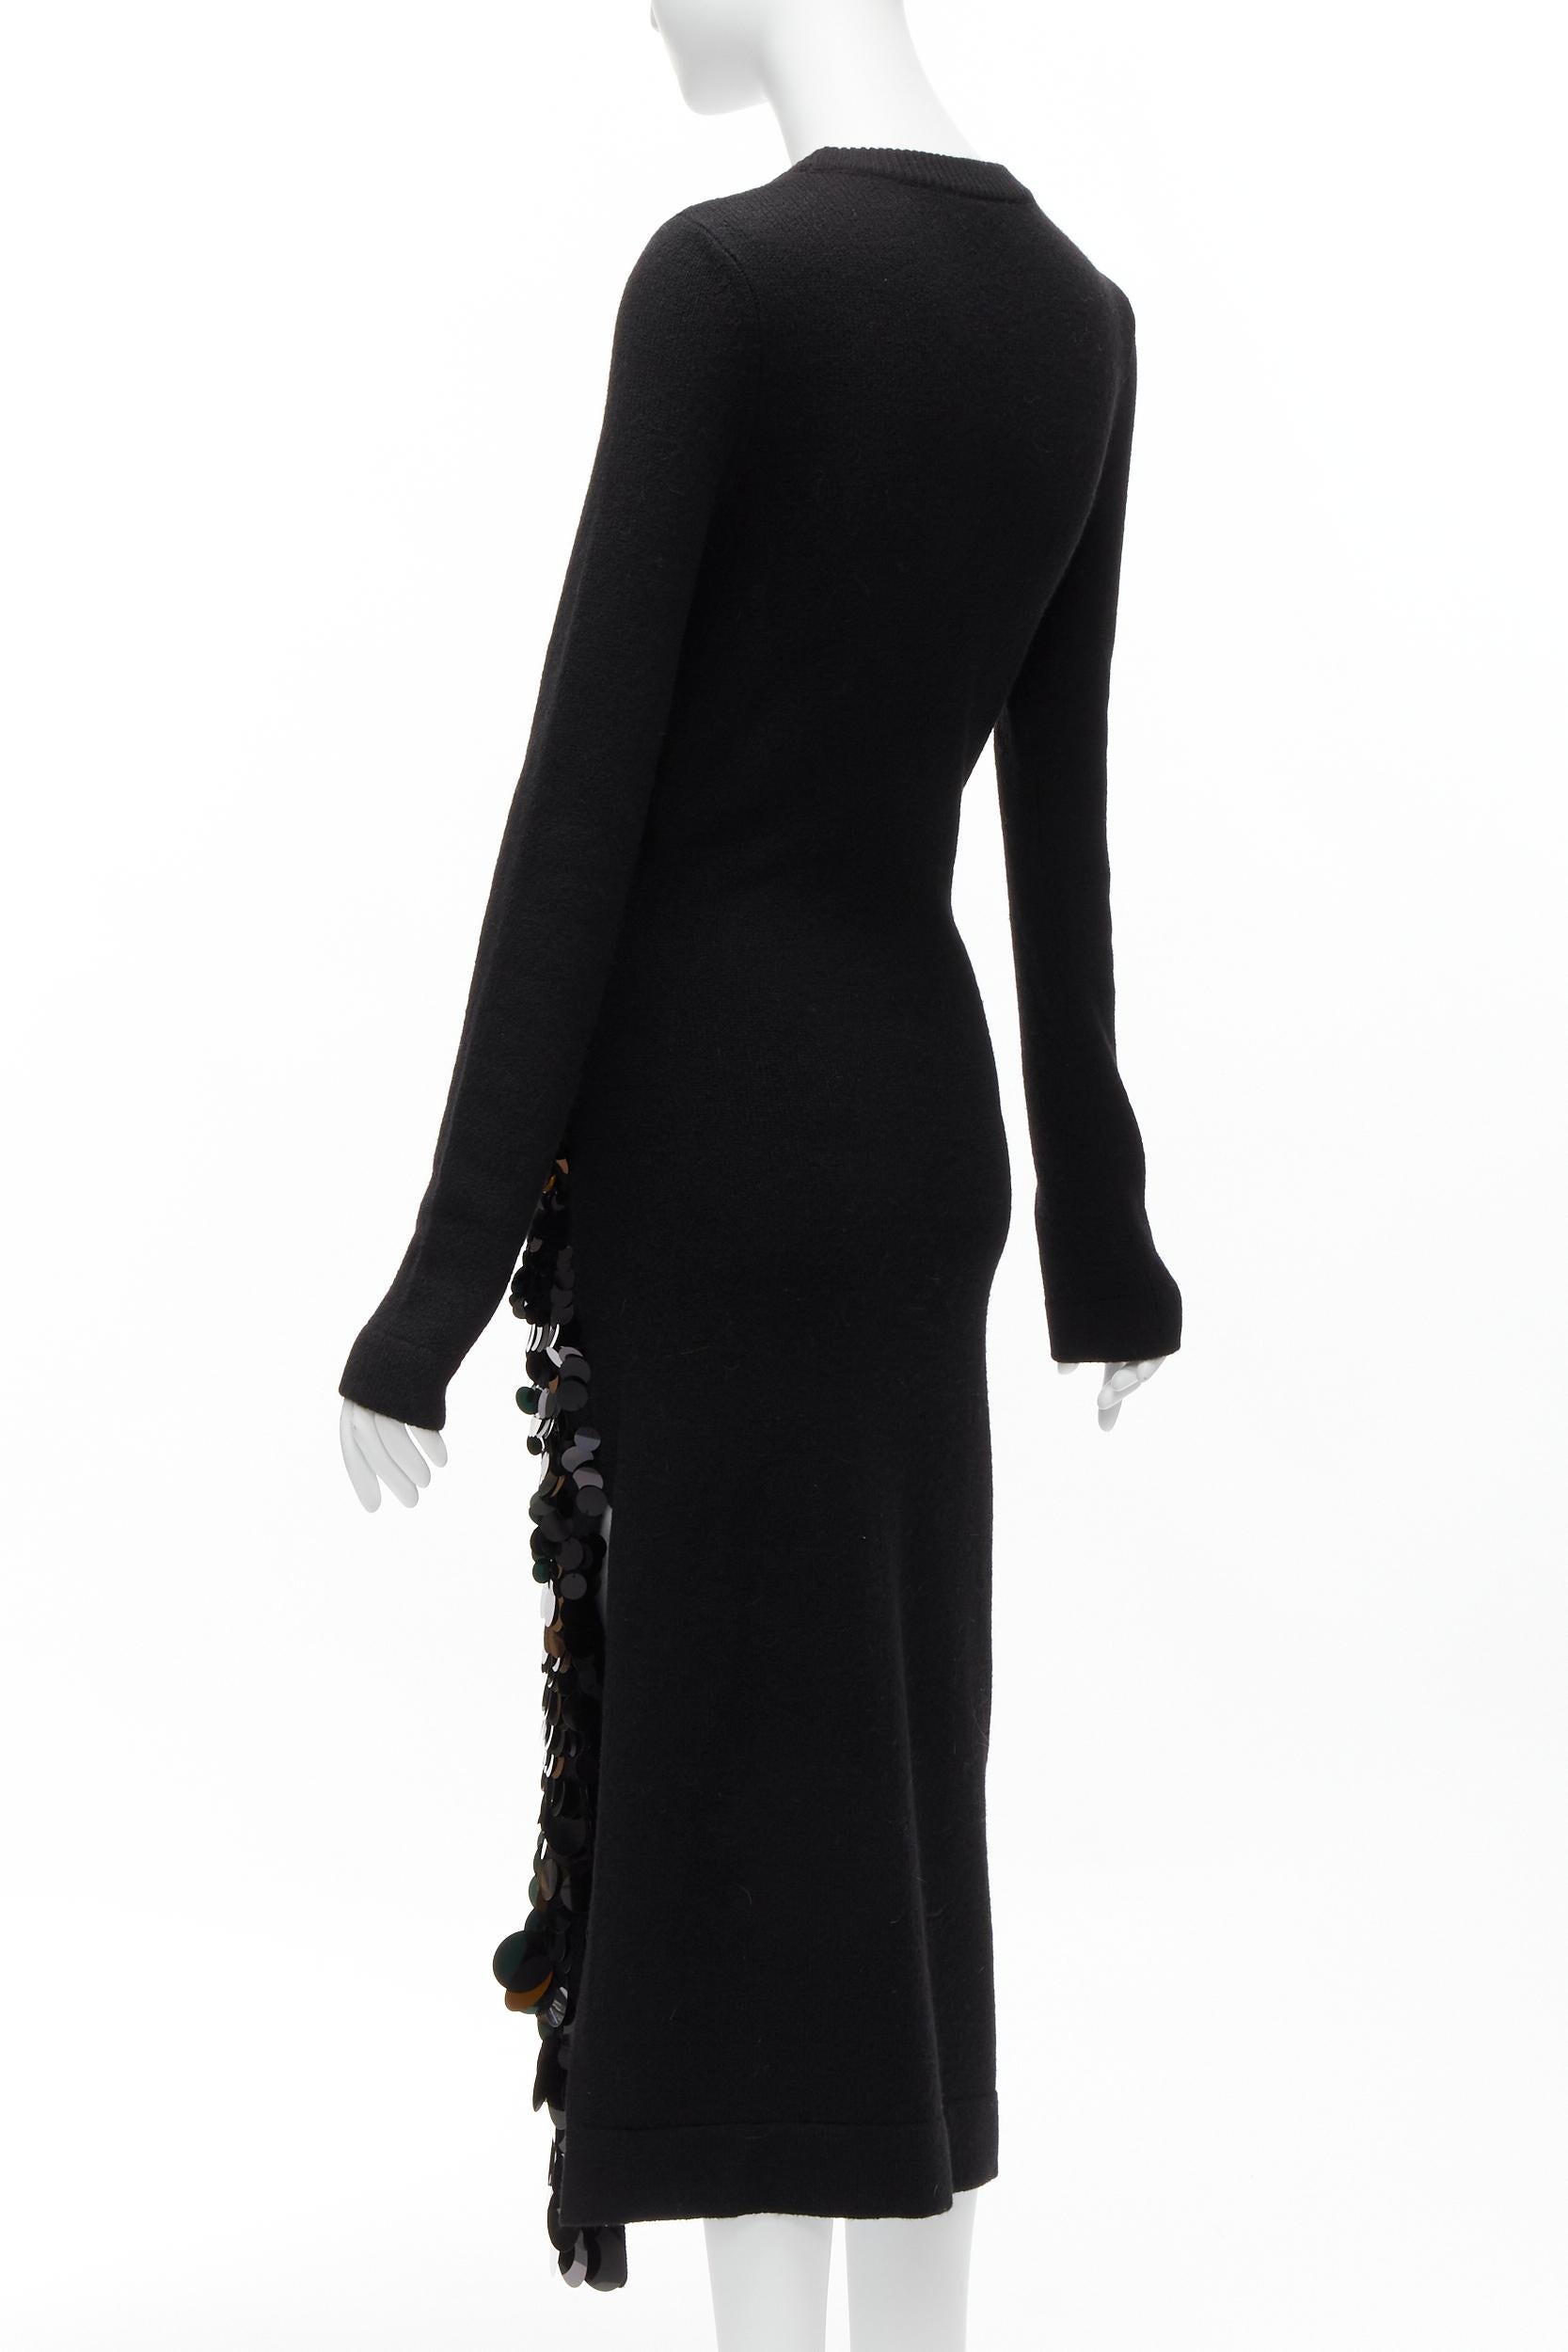 ALTUZARRA black merino wool knit gradient pailette cocktail dress XS For Sale 1